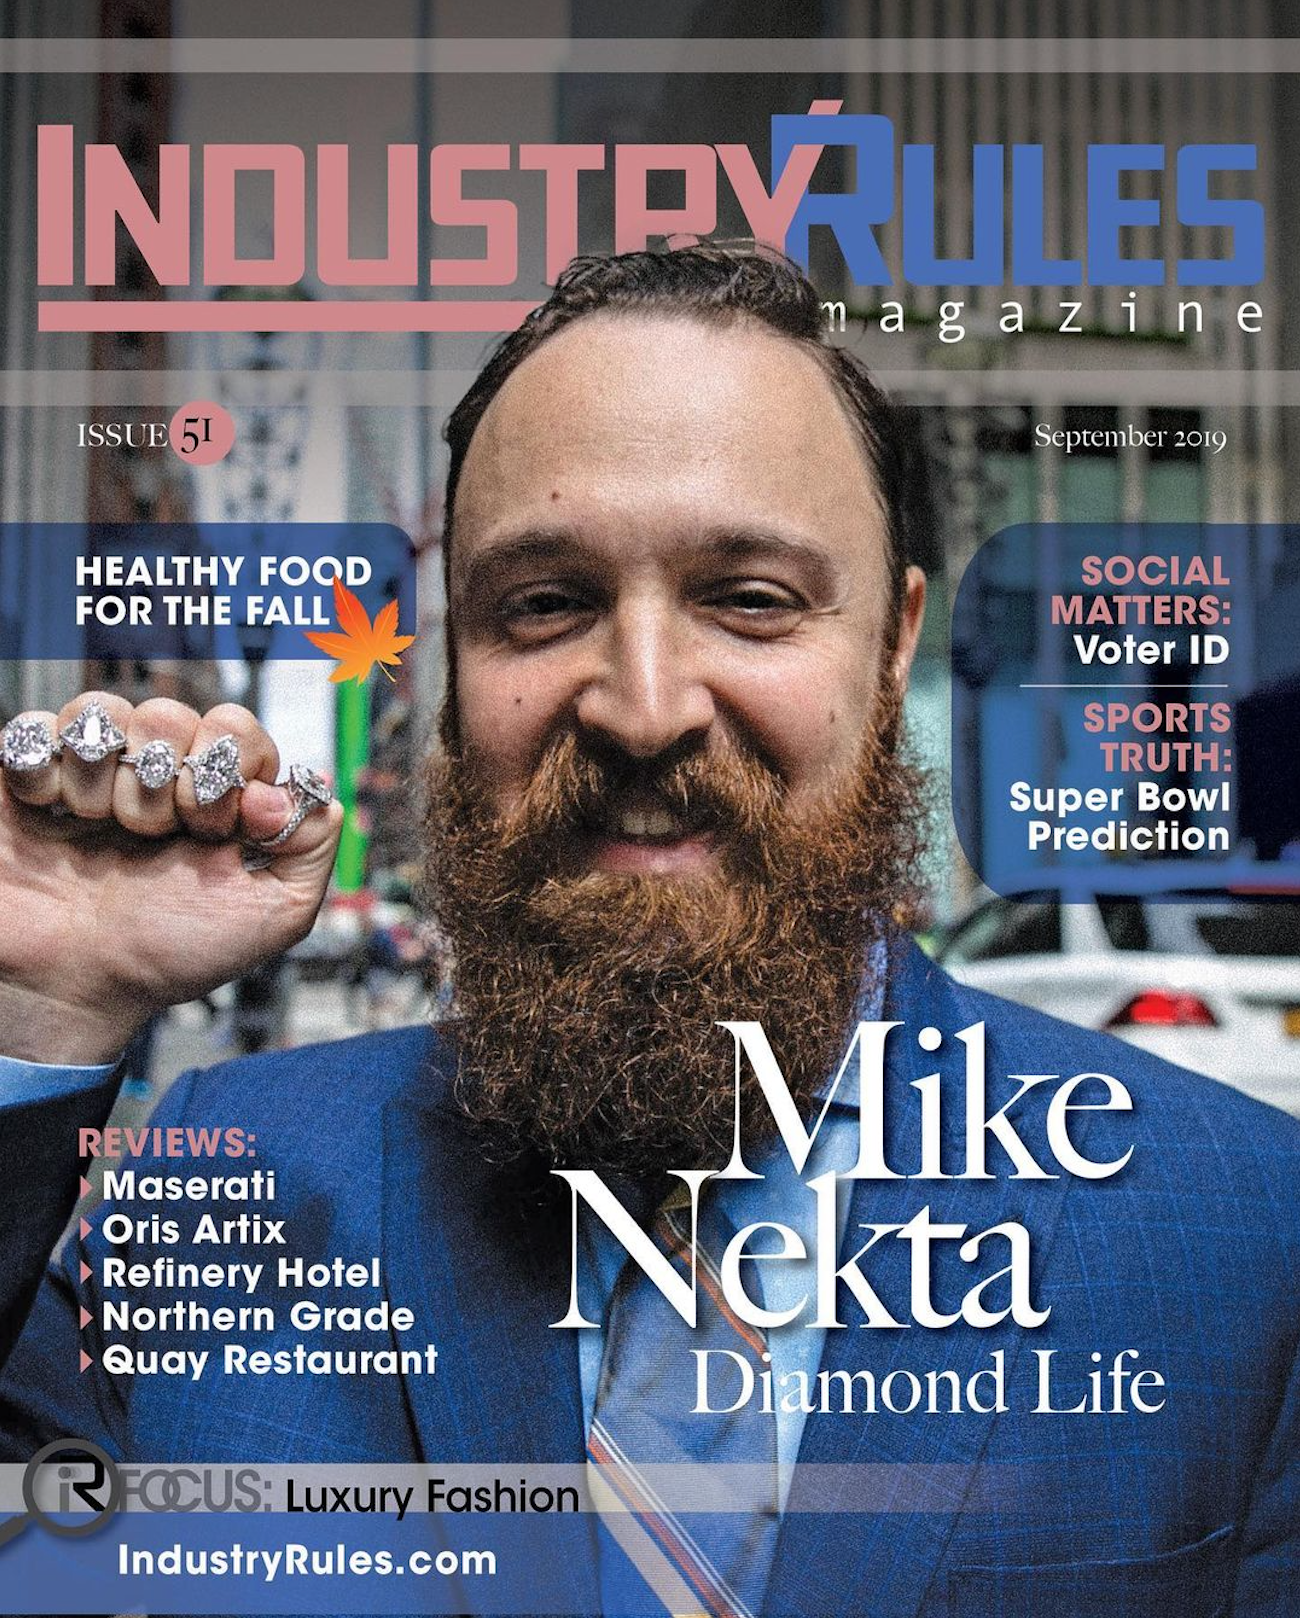 Mike Nekta the Diamond Industry Changer